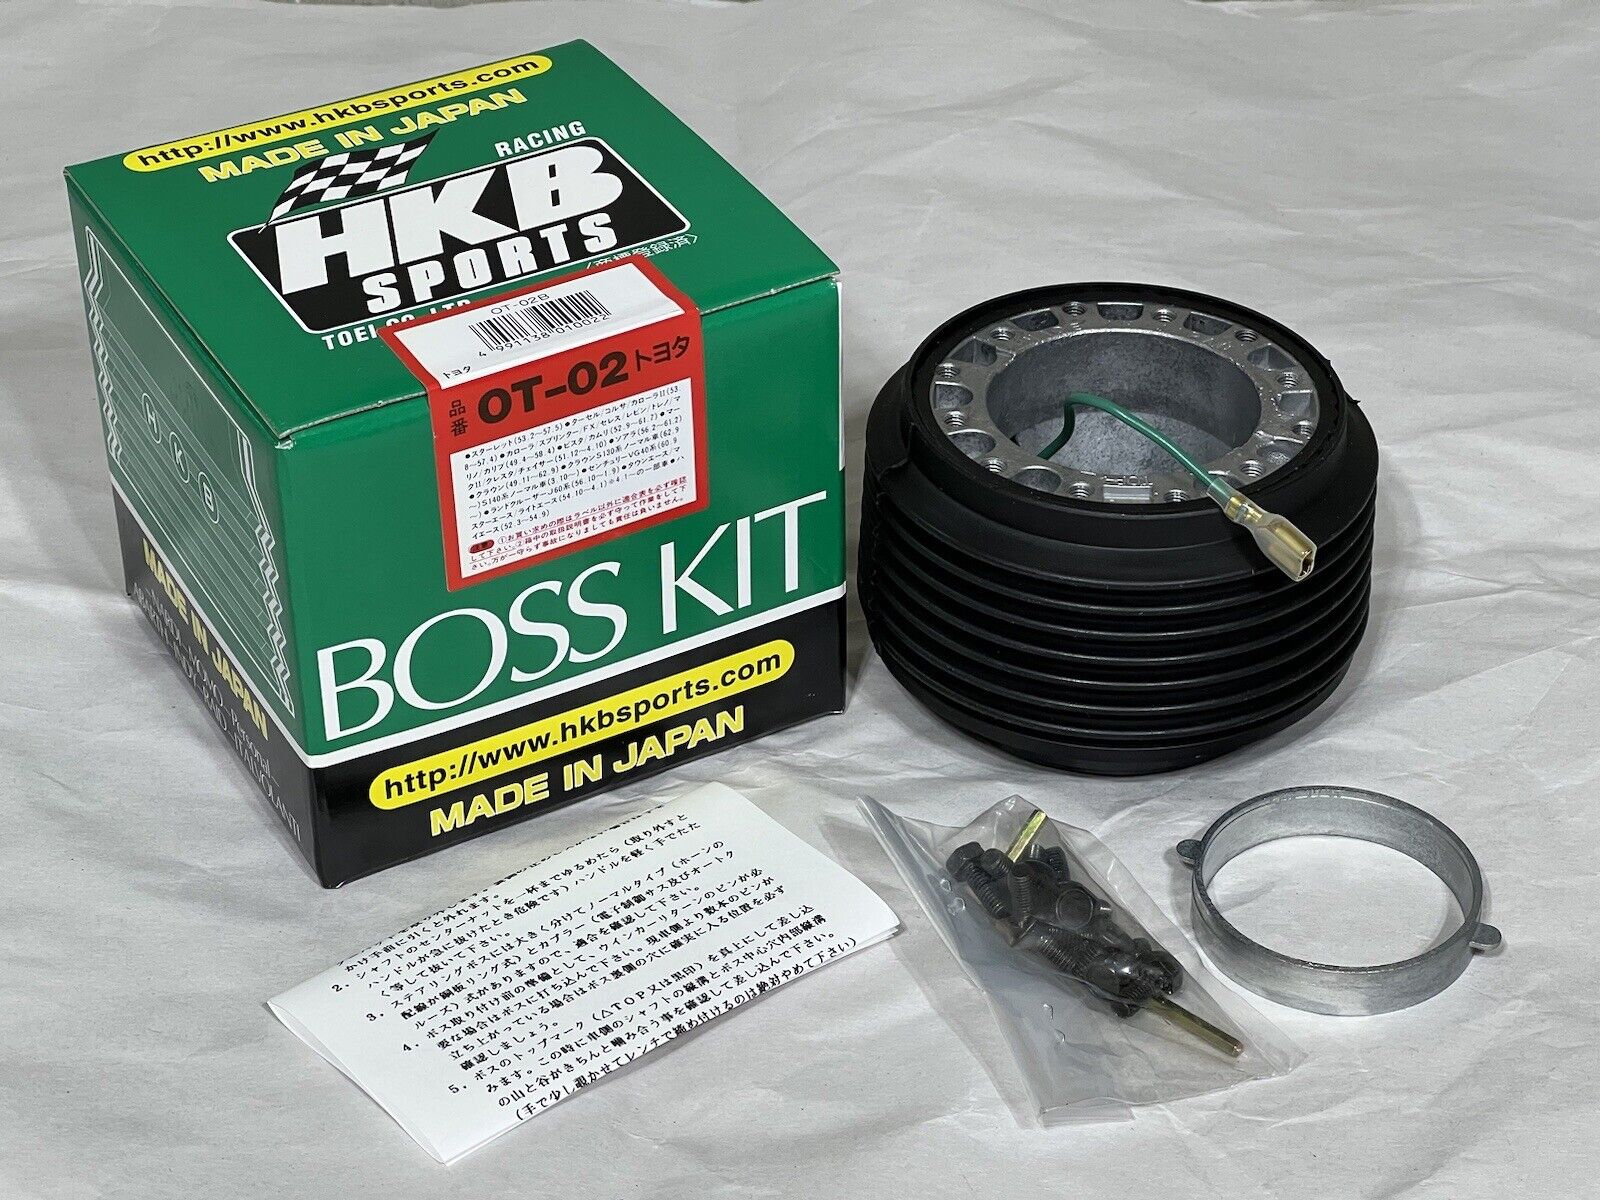 HKB SPORTS Steering Wheel Adapter Kit Boss Kit 81-85 Toyota Soarer Z10 Series